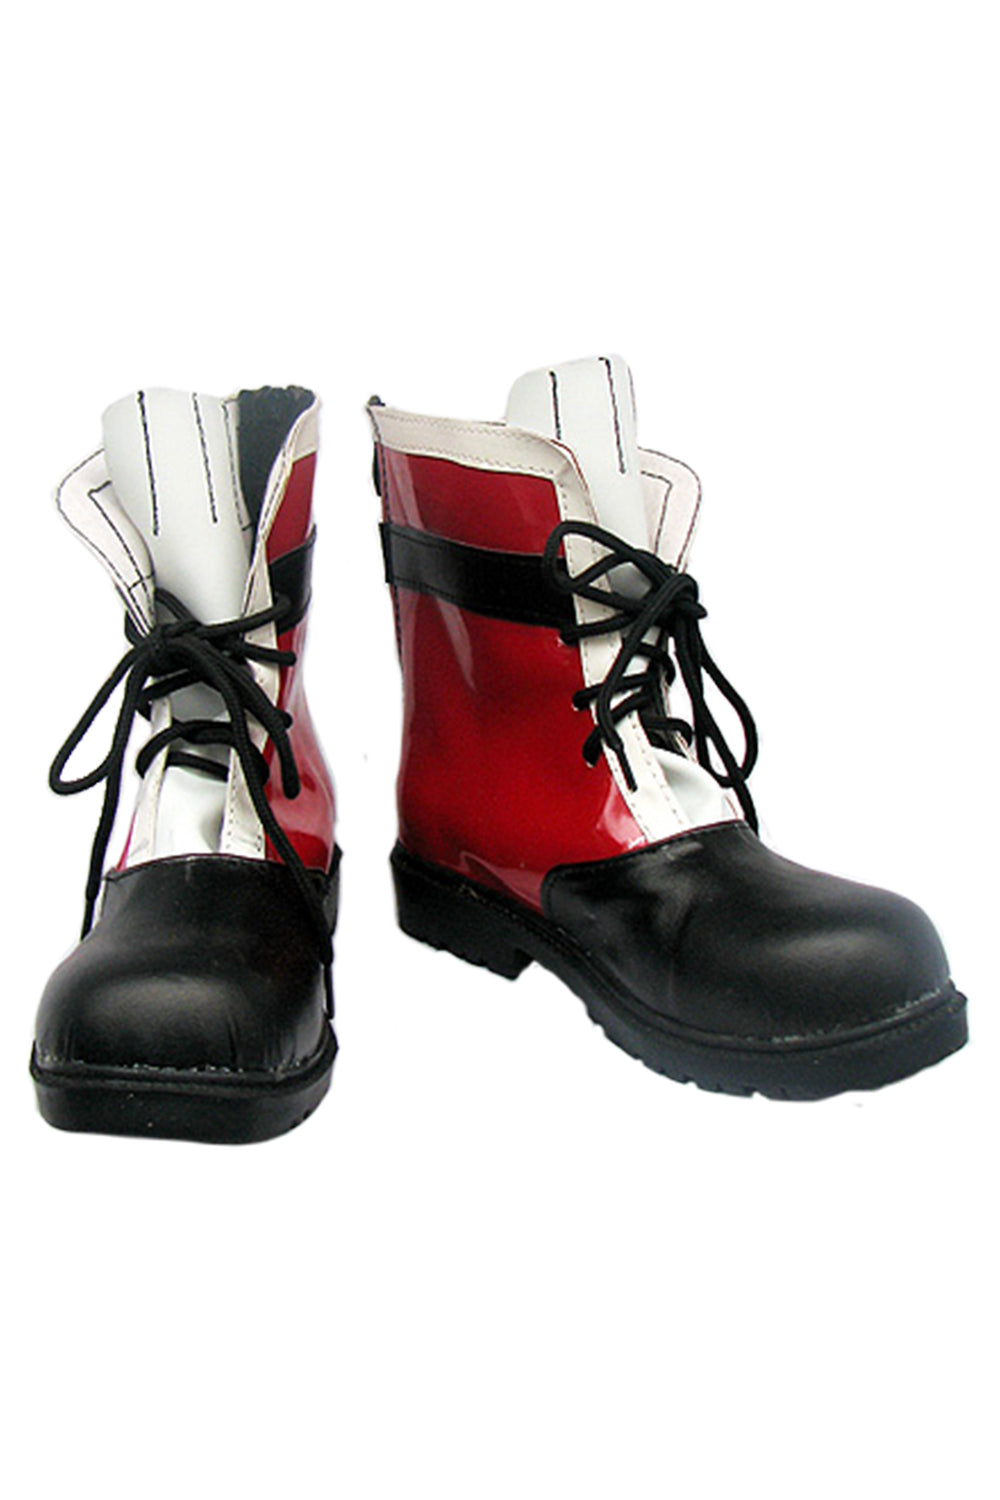 Gravitation Shuichi Shindou Cosplay Boots Shoes